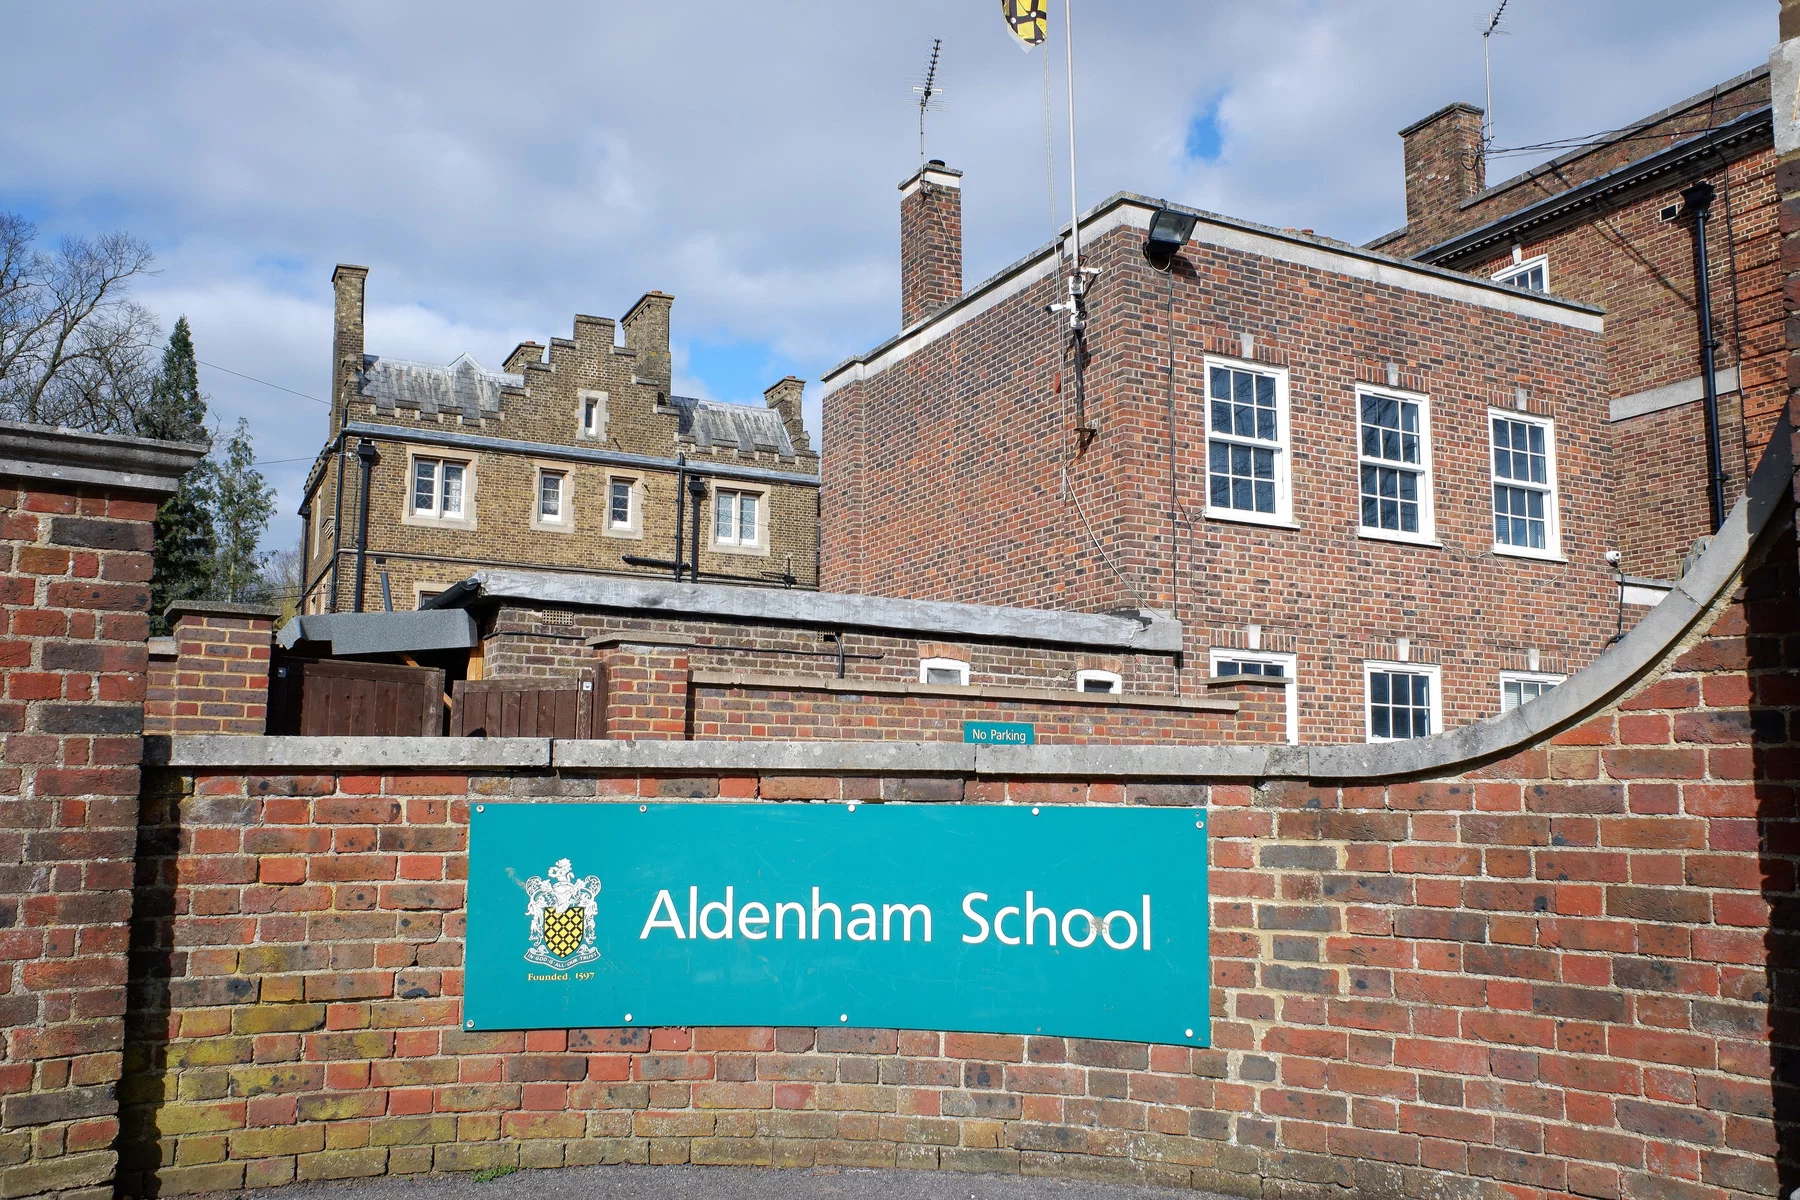 Aldenham Preparatory School, a private primary school in the UK